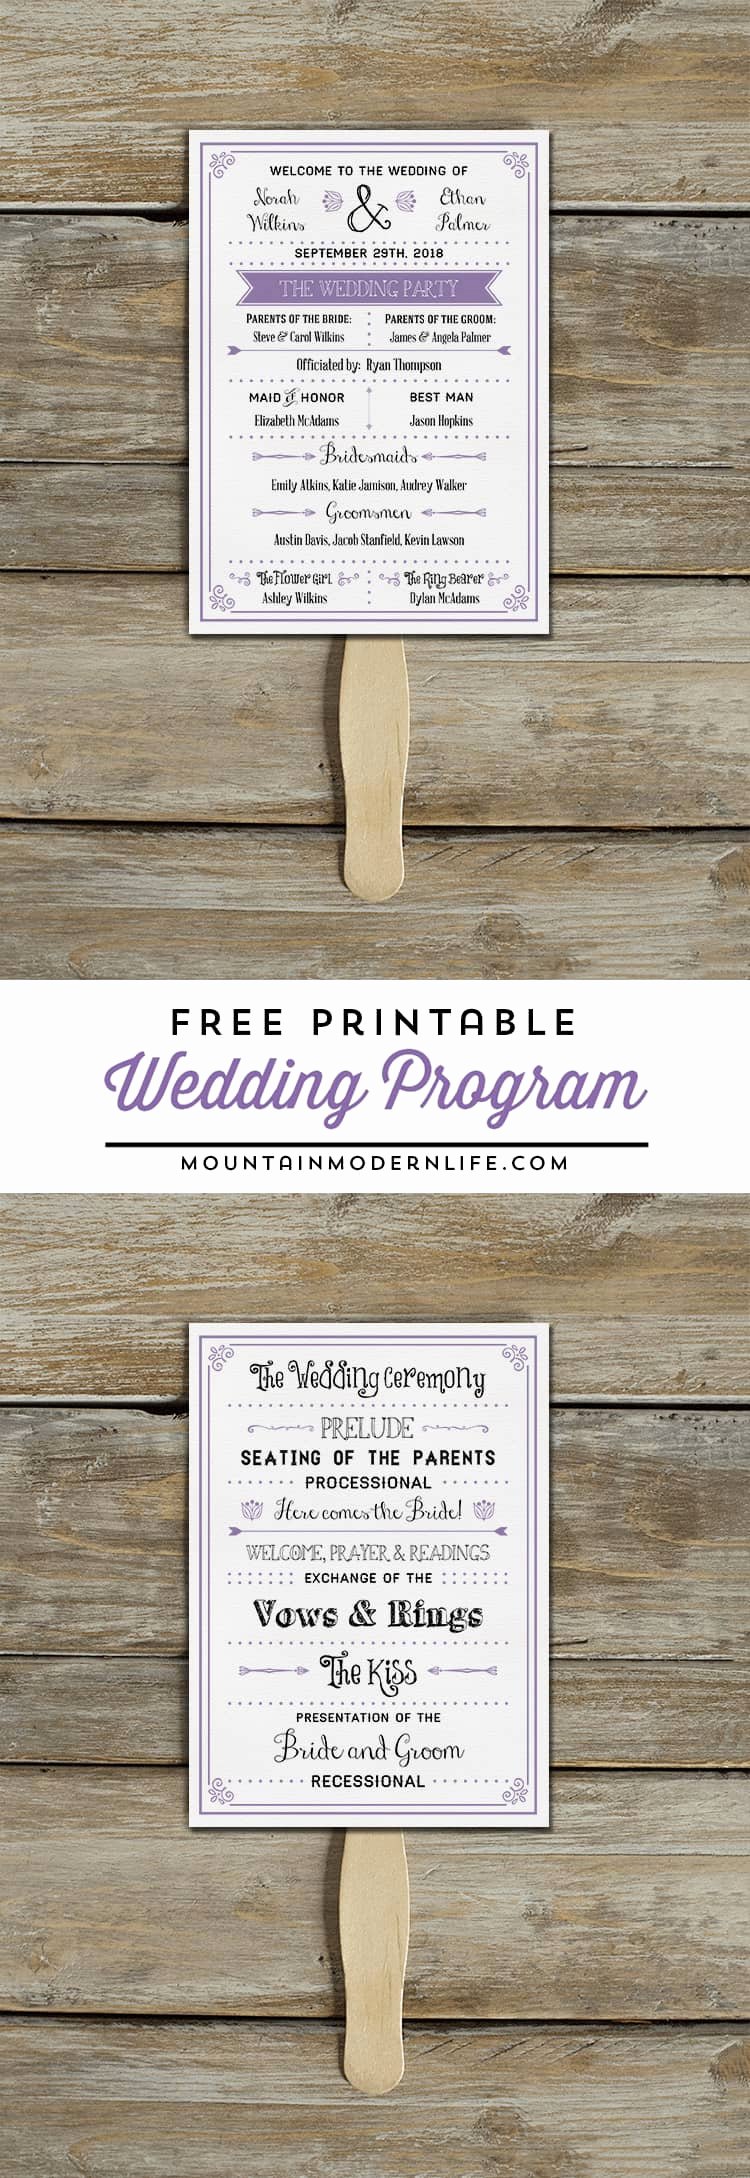 Free Diy Wedding Programs Templates Lovely Free Printable Wedding Program